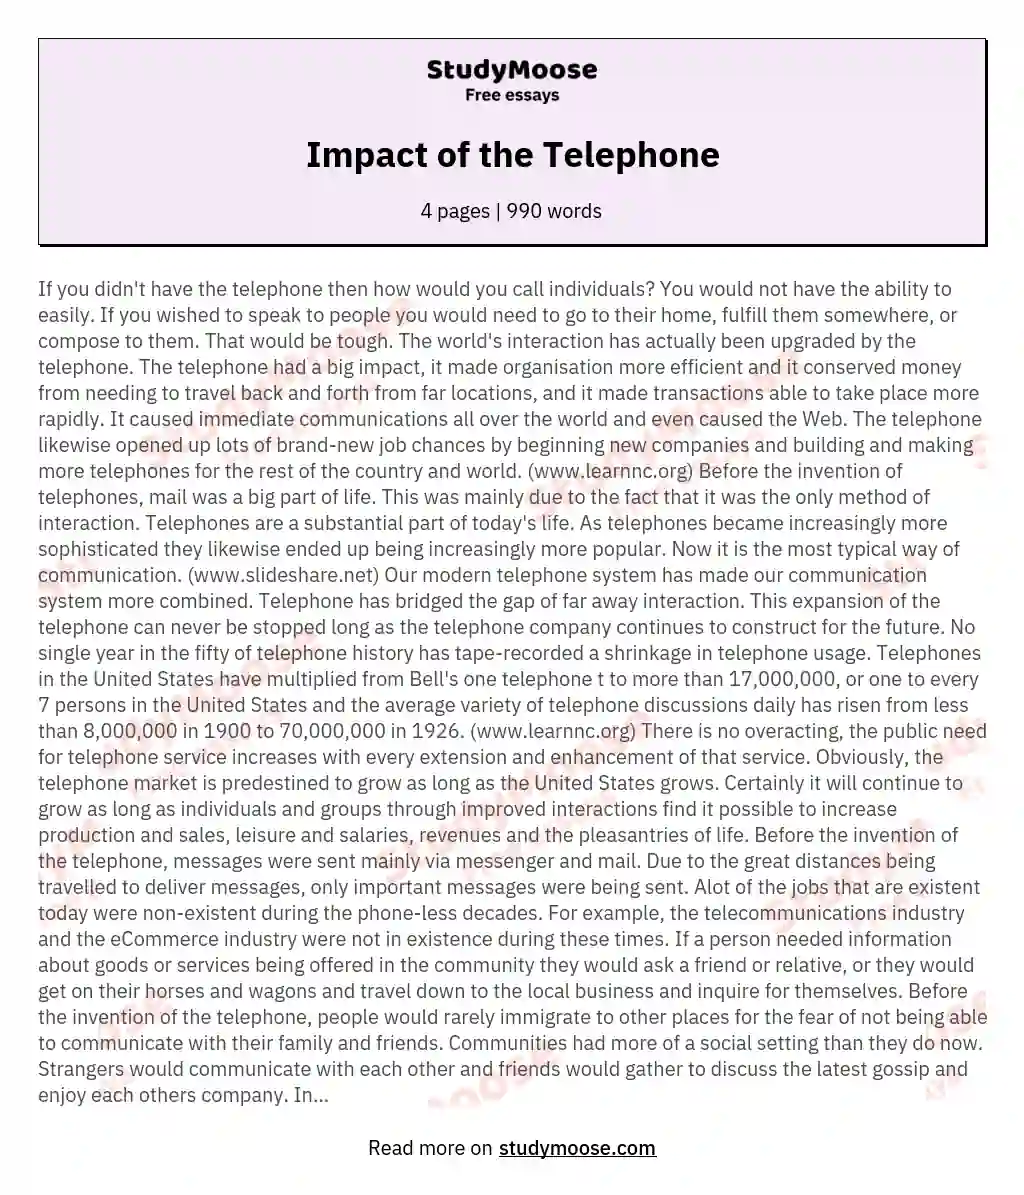 Impact of the Telephone essay